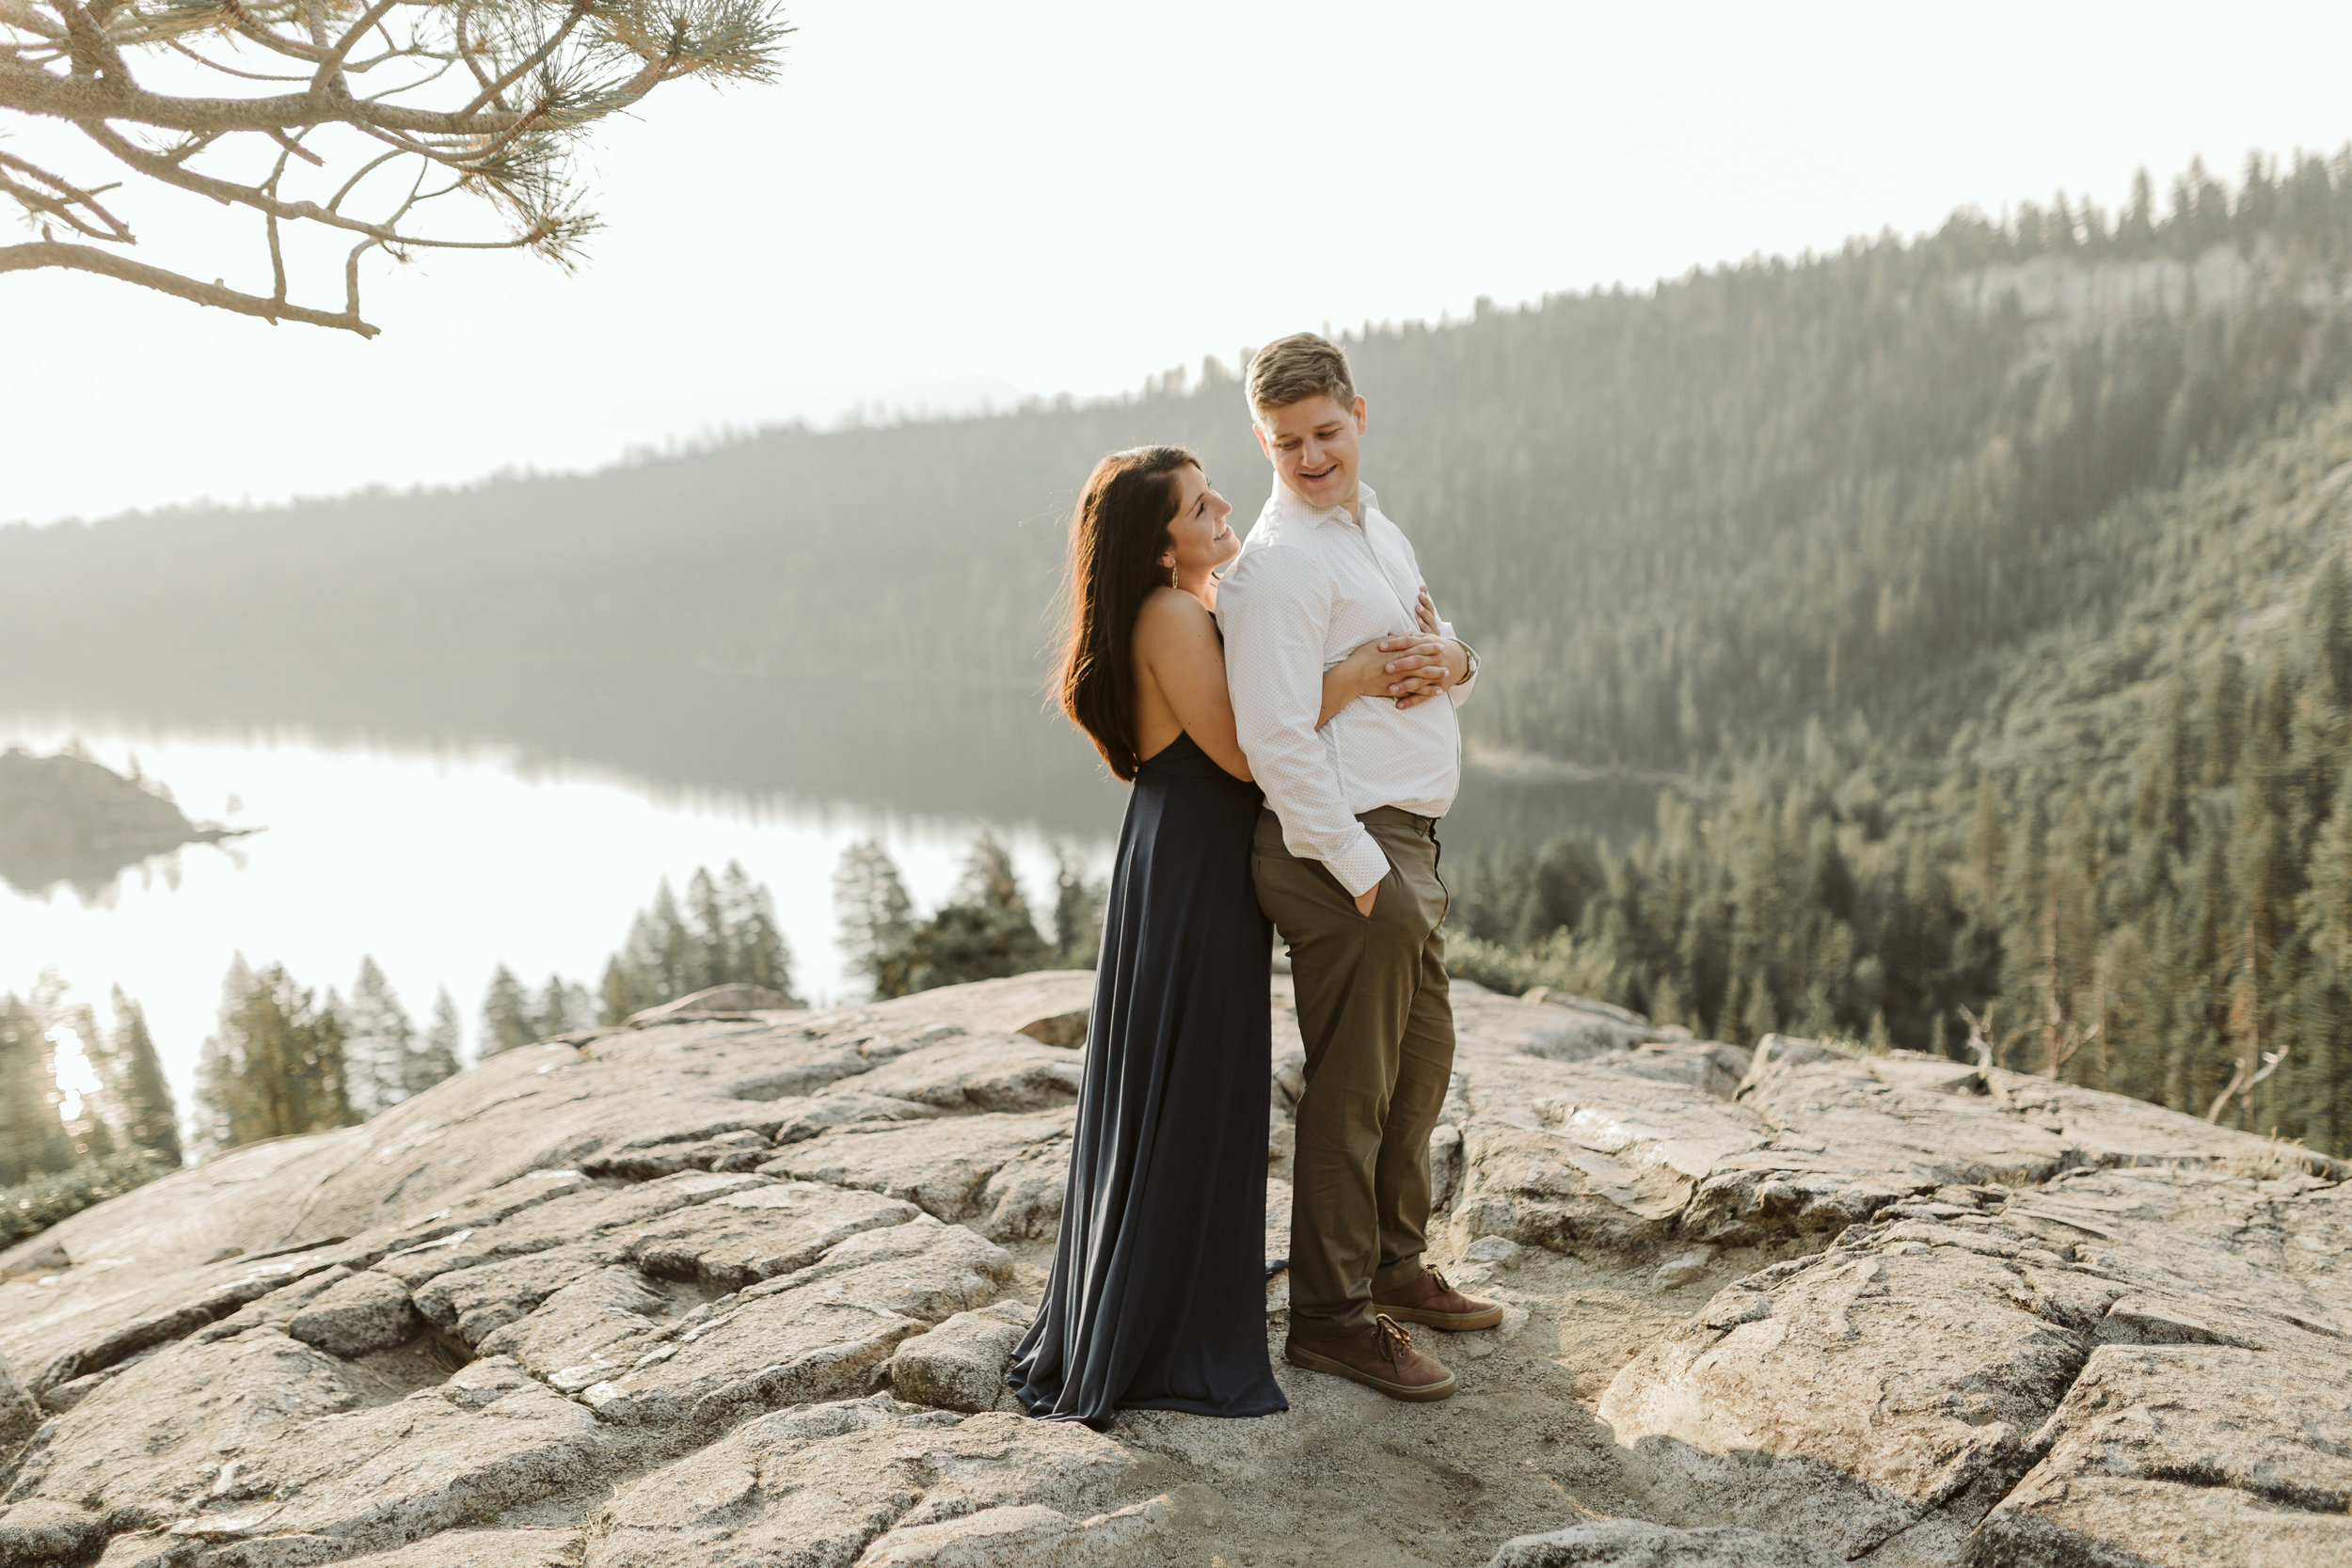 nicole-daacke-photography-lake-tahoe-sunrise-summer-adventure-engagement-photos-nevada-wedding-elopement-photographer-golden-emerald-bay-light-pine-trees-summer-vibe-fun-carefree-authentic-love-46.jpg